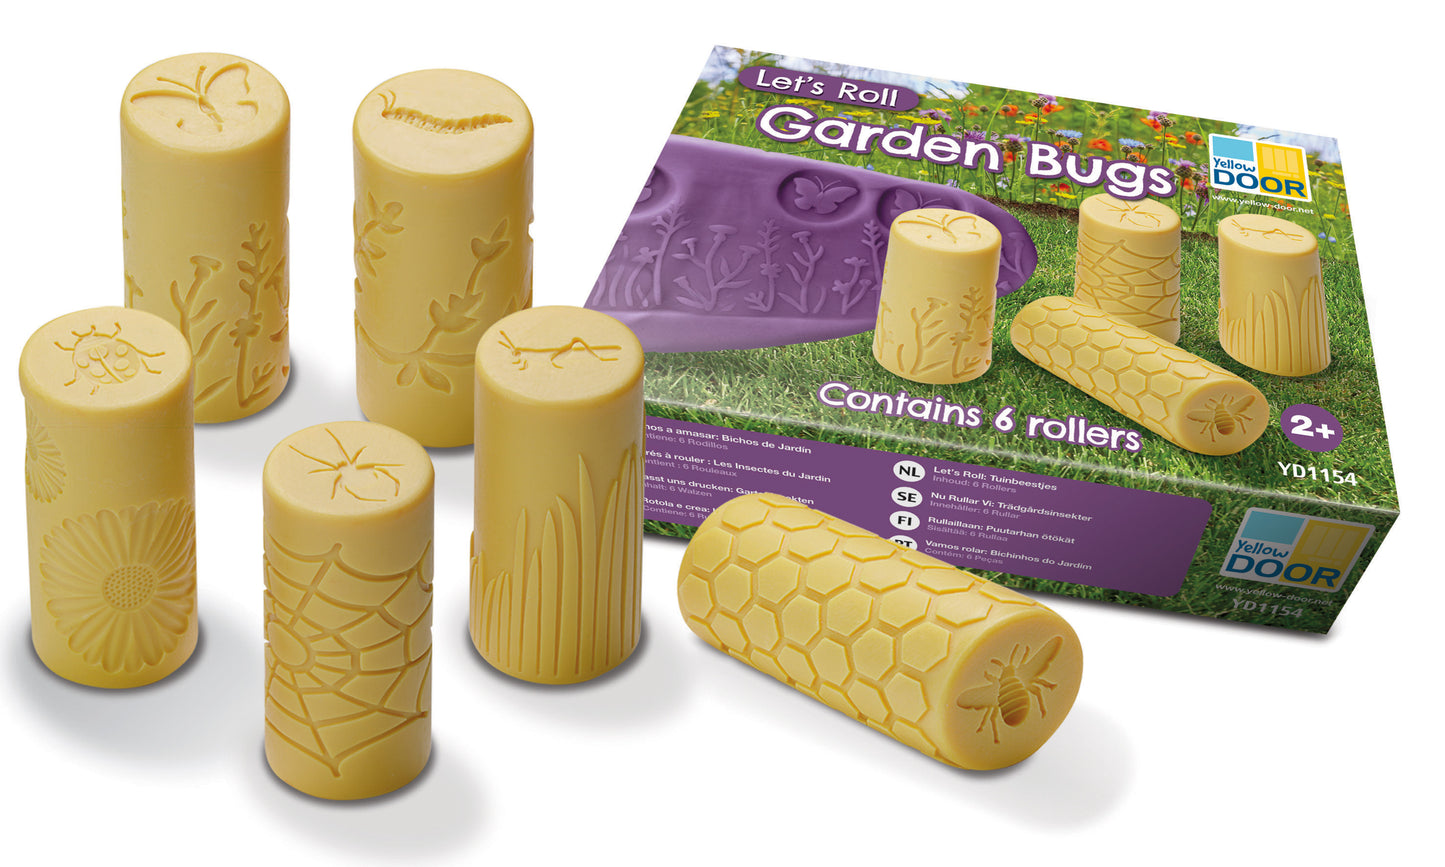 Let's Roll 'Garden Bugs' (6 rollers én stempels in één)